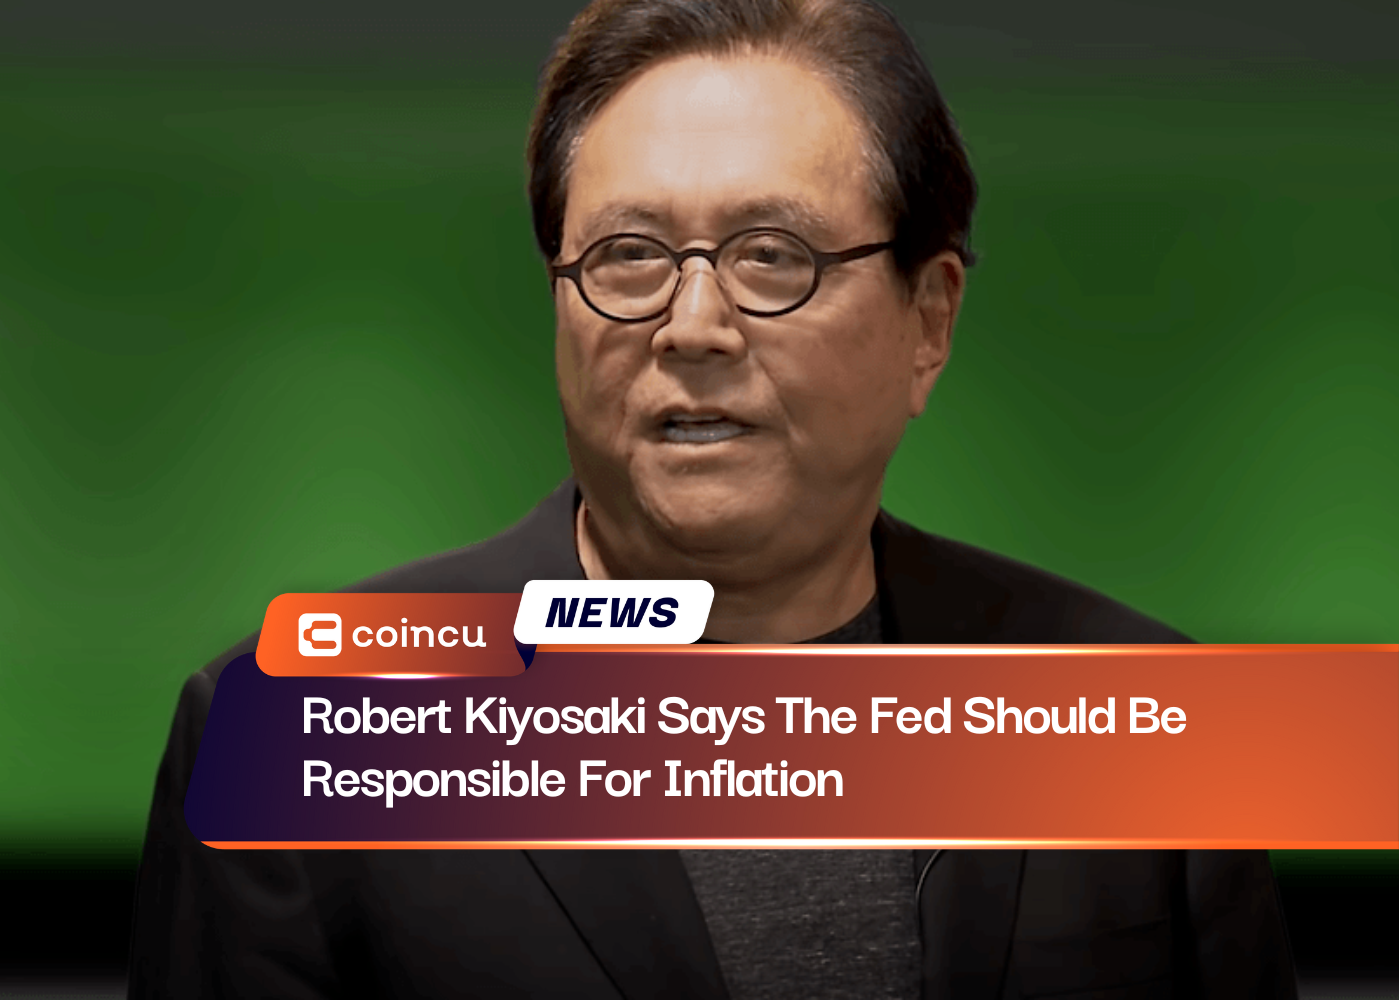 Robert Kiyosaki Says The Fed Should Be Responsible For Inflation